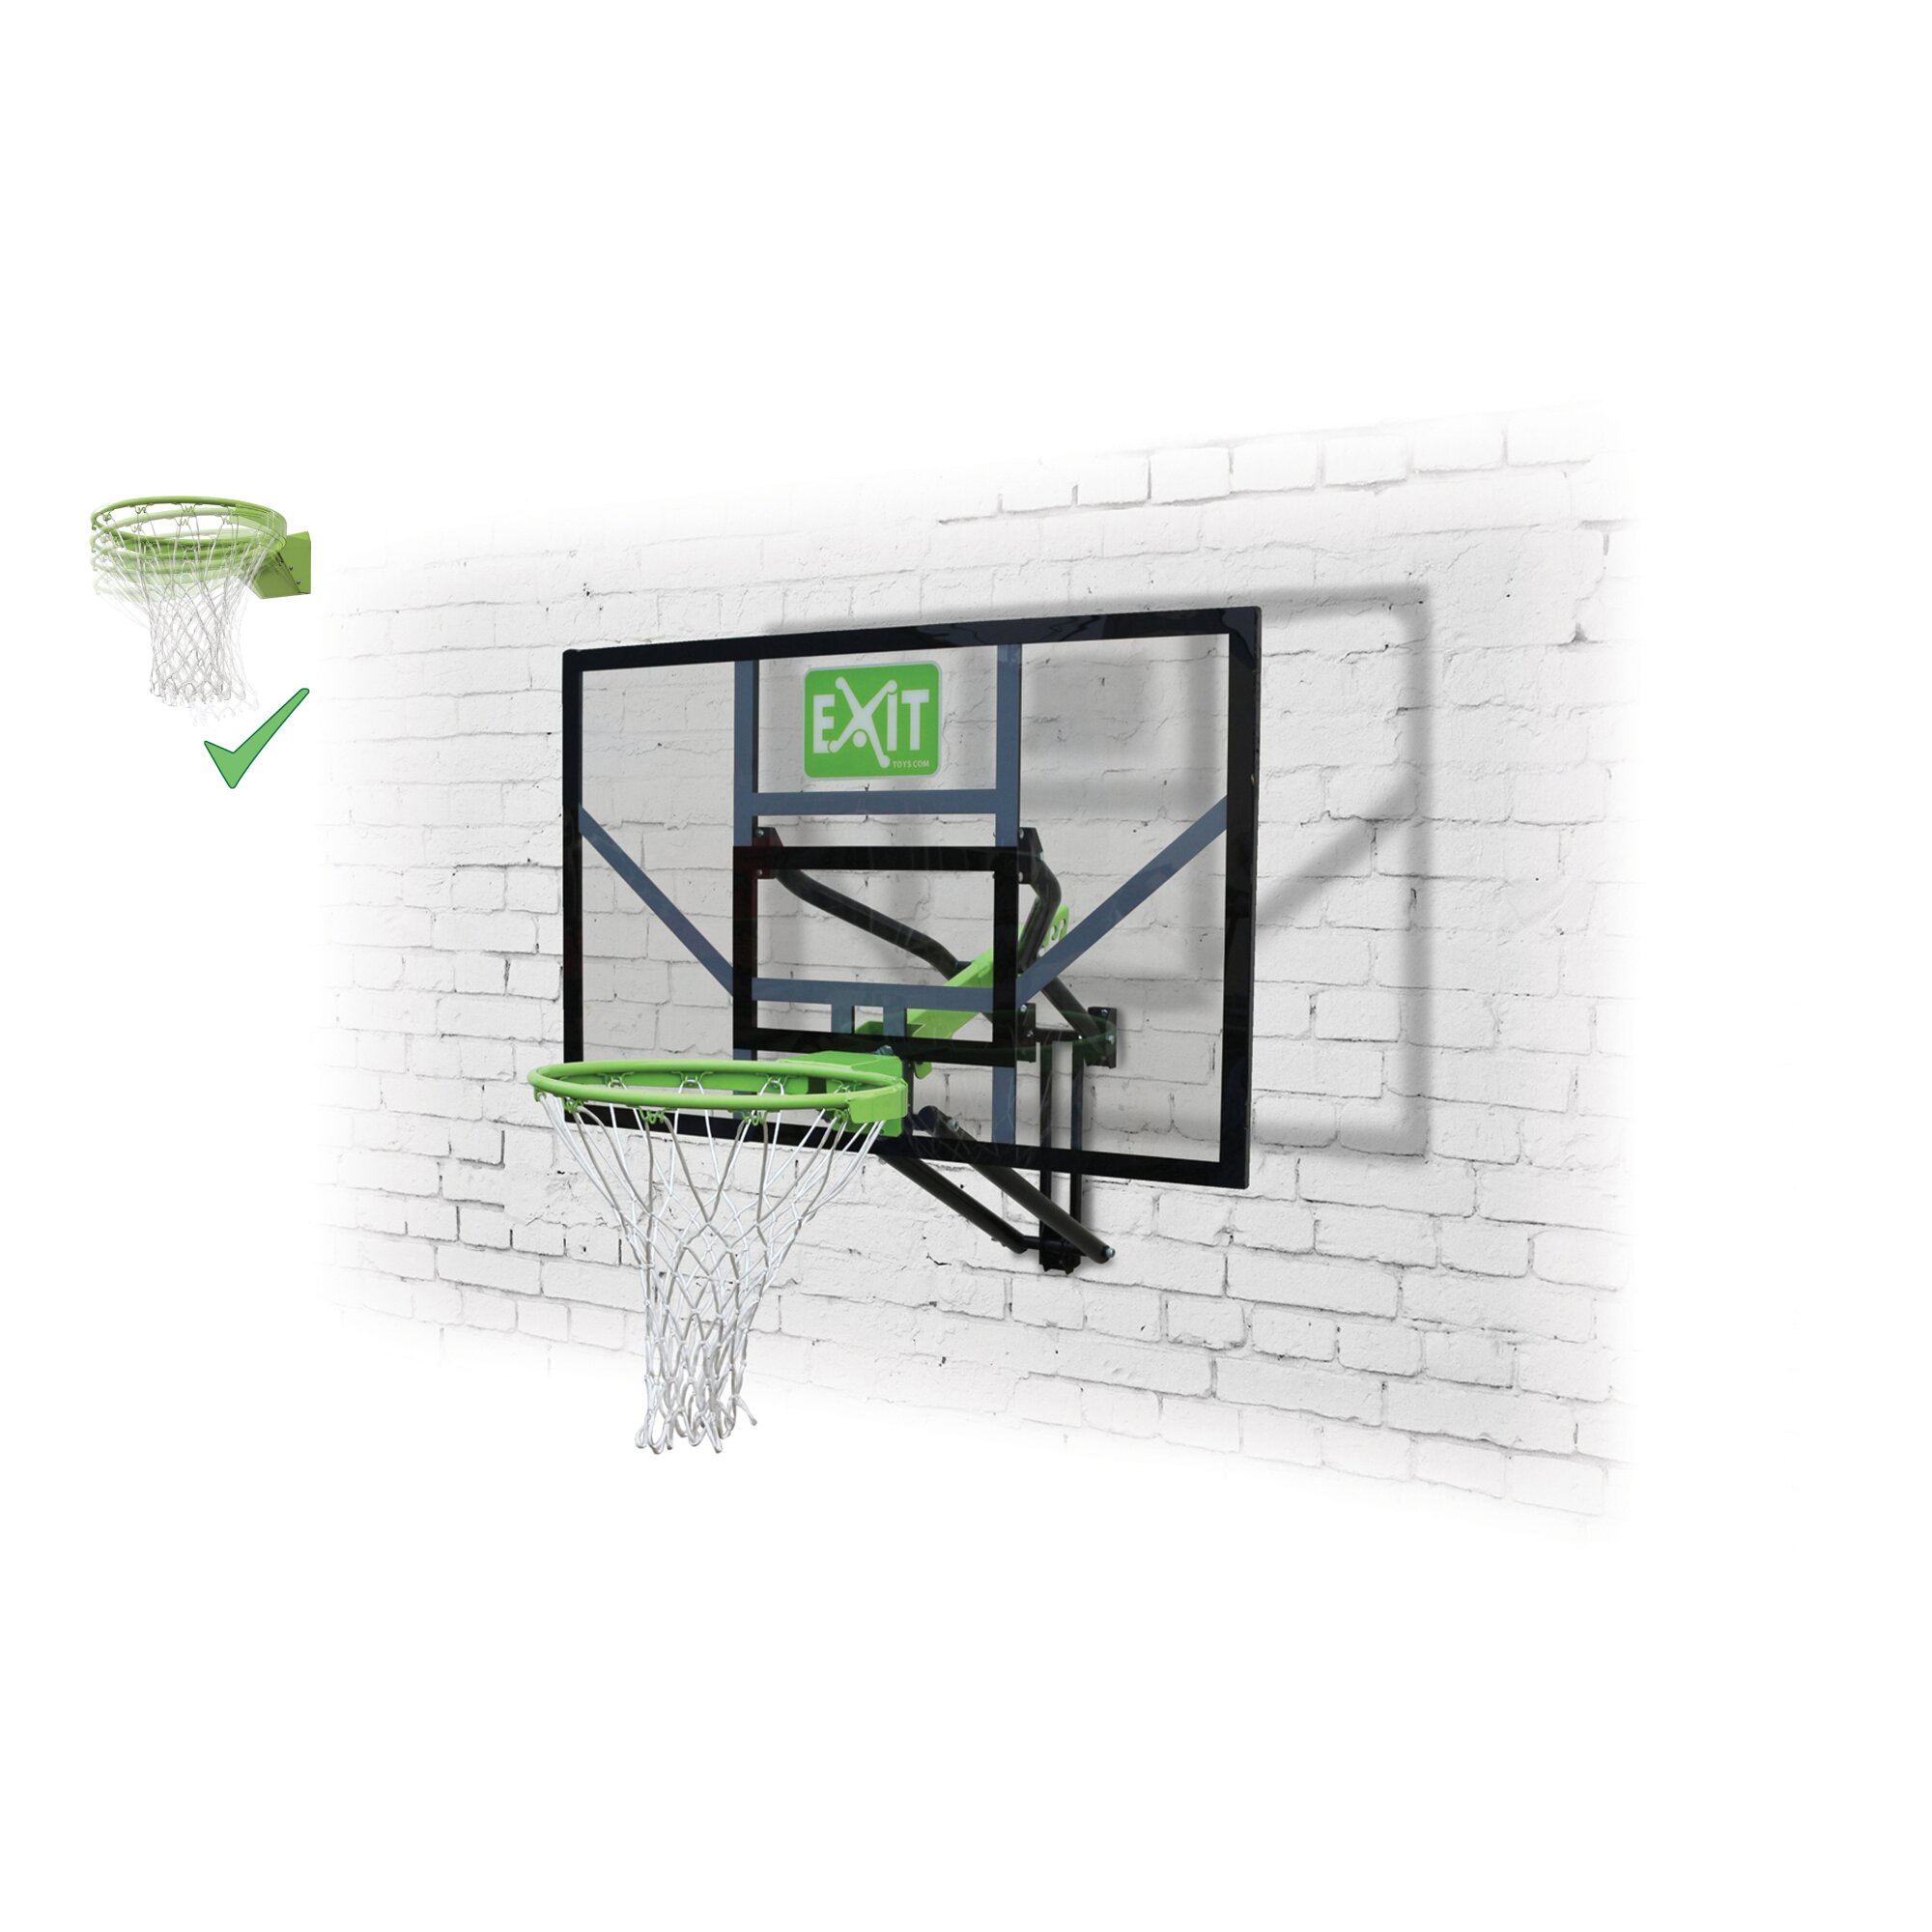 EXIT Galaxy Basketballkorb Wandmontage ink.. Dunkring grün/schwarz Wand